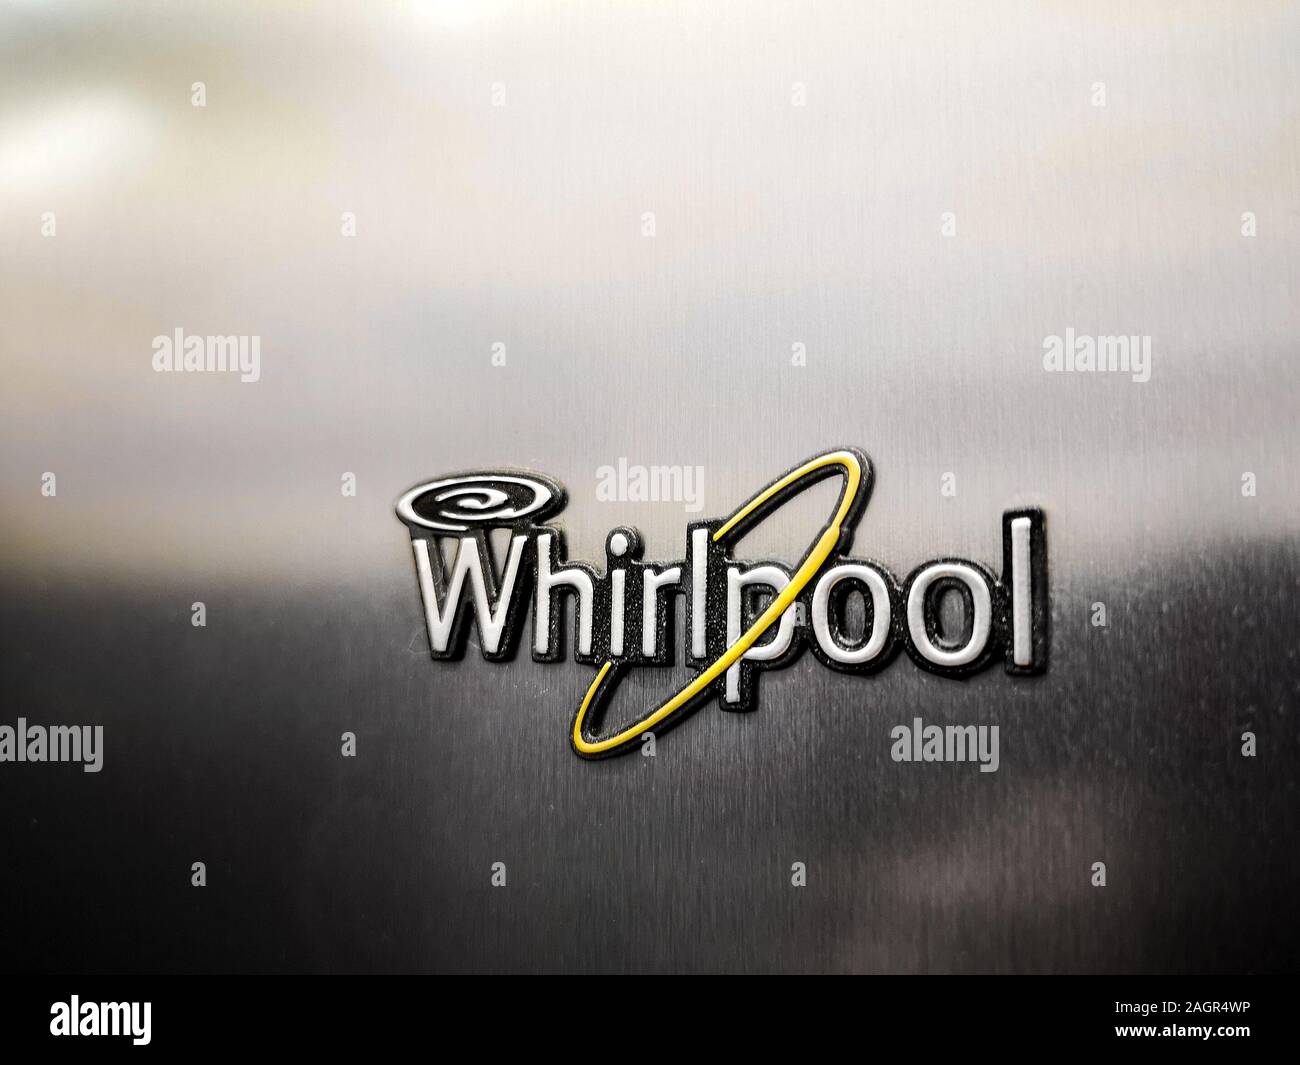 Whirlpool logo chrome metal surface on background Stock Photo